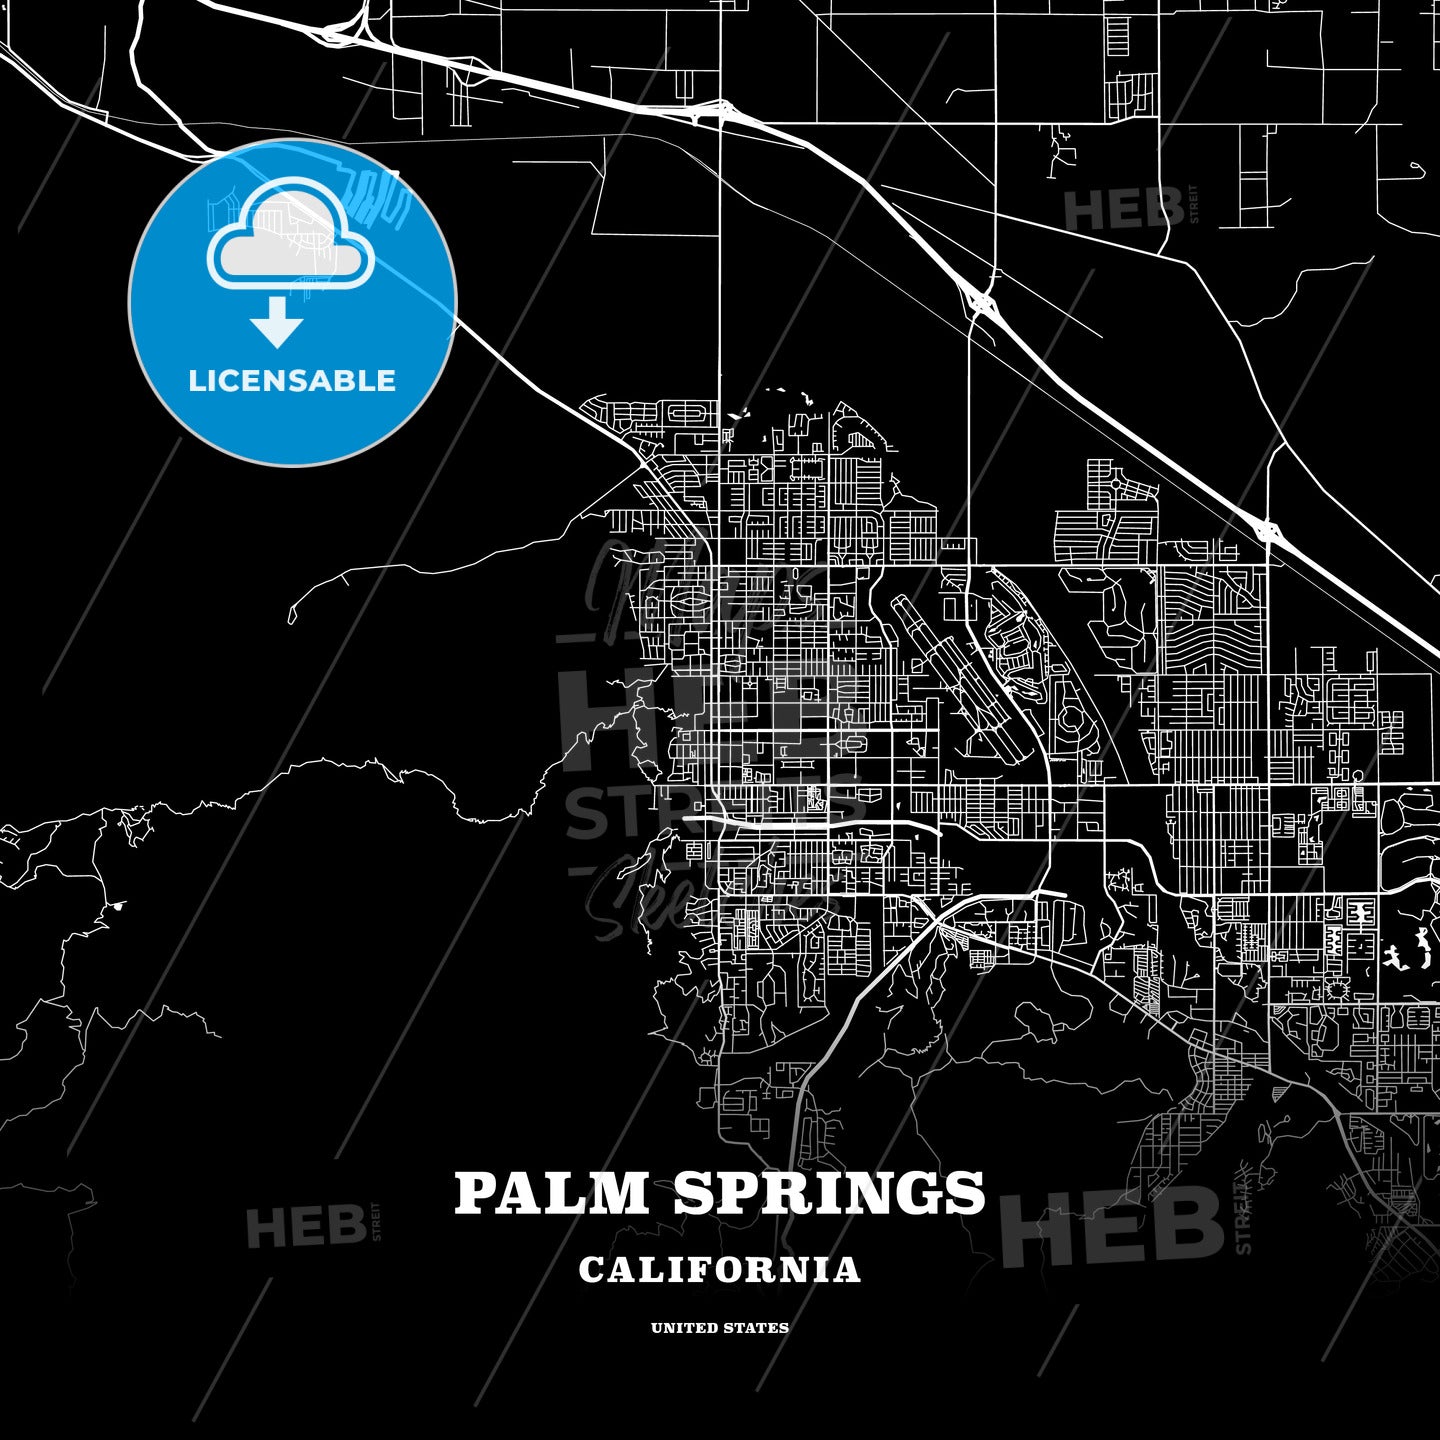 Palm Springs, California, USA map